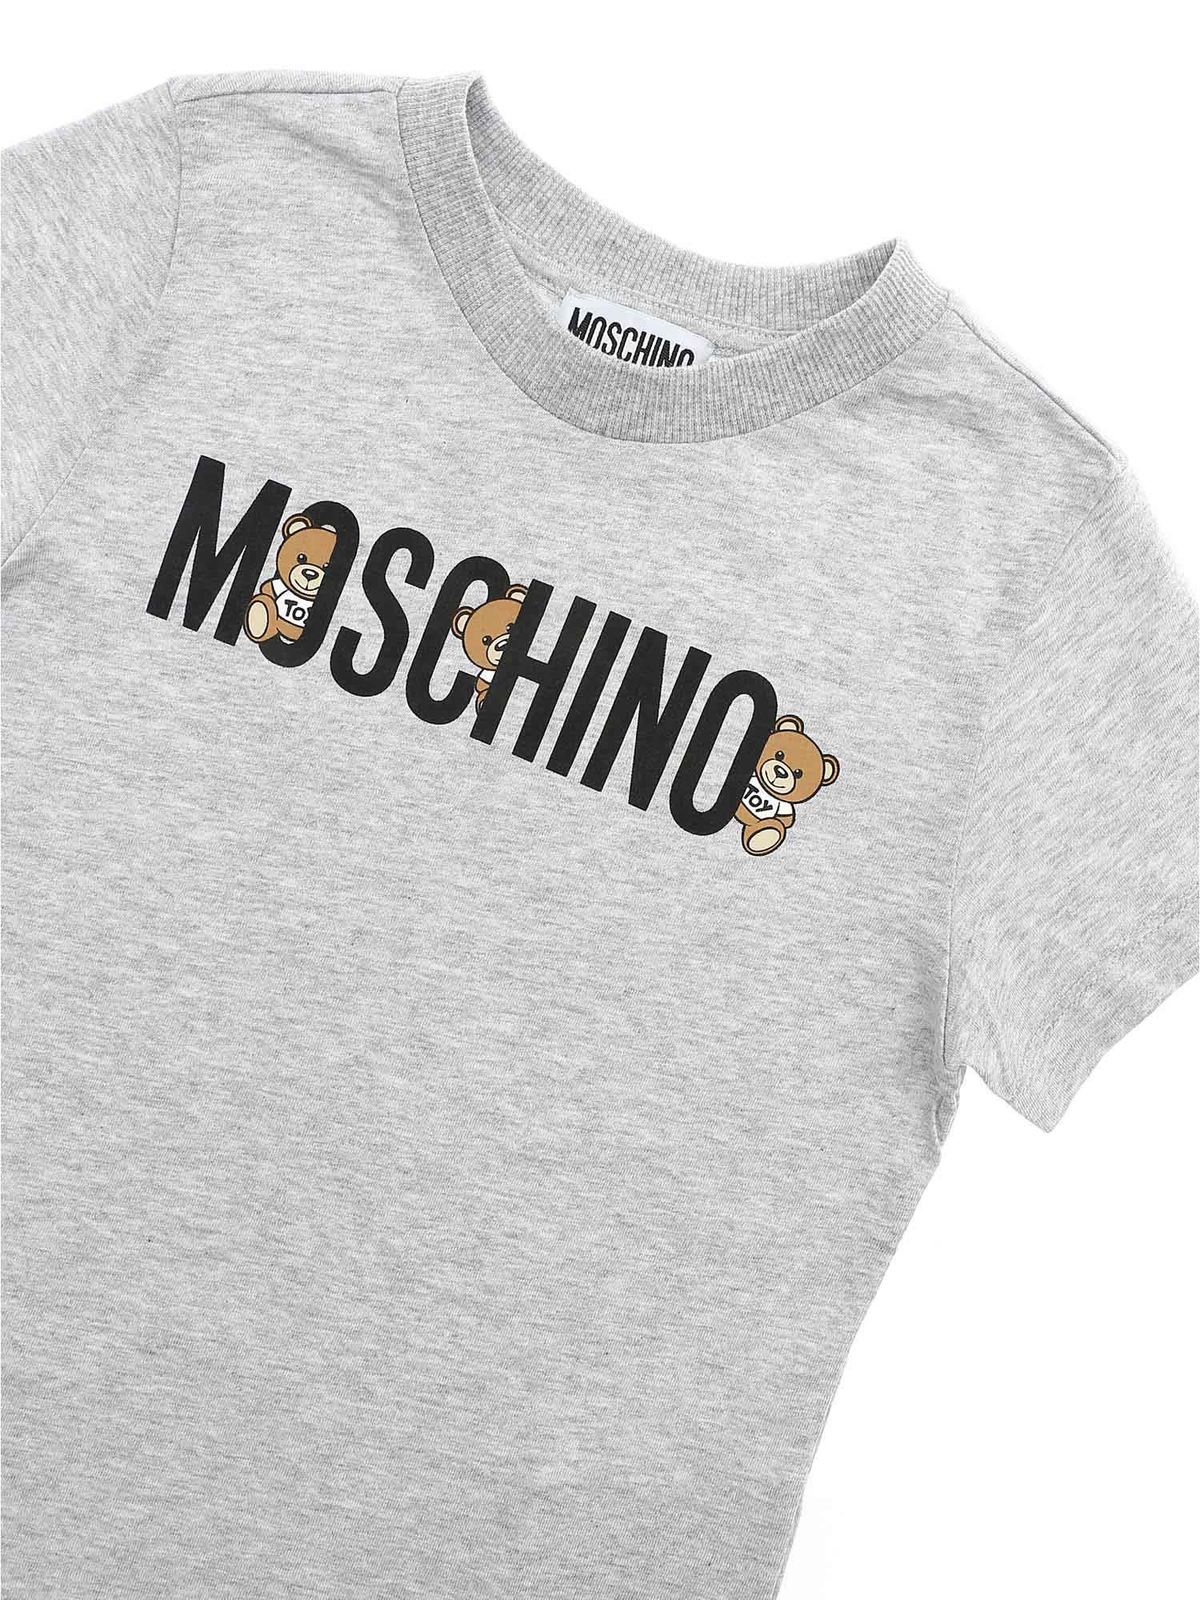 Moschino Kids - Moschino logo T-shirt 